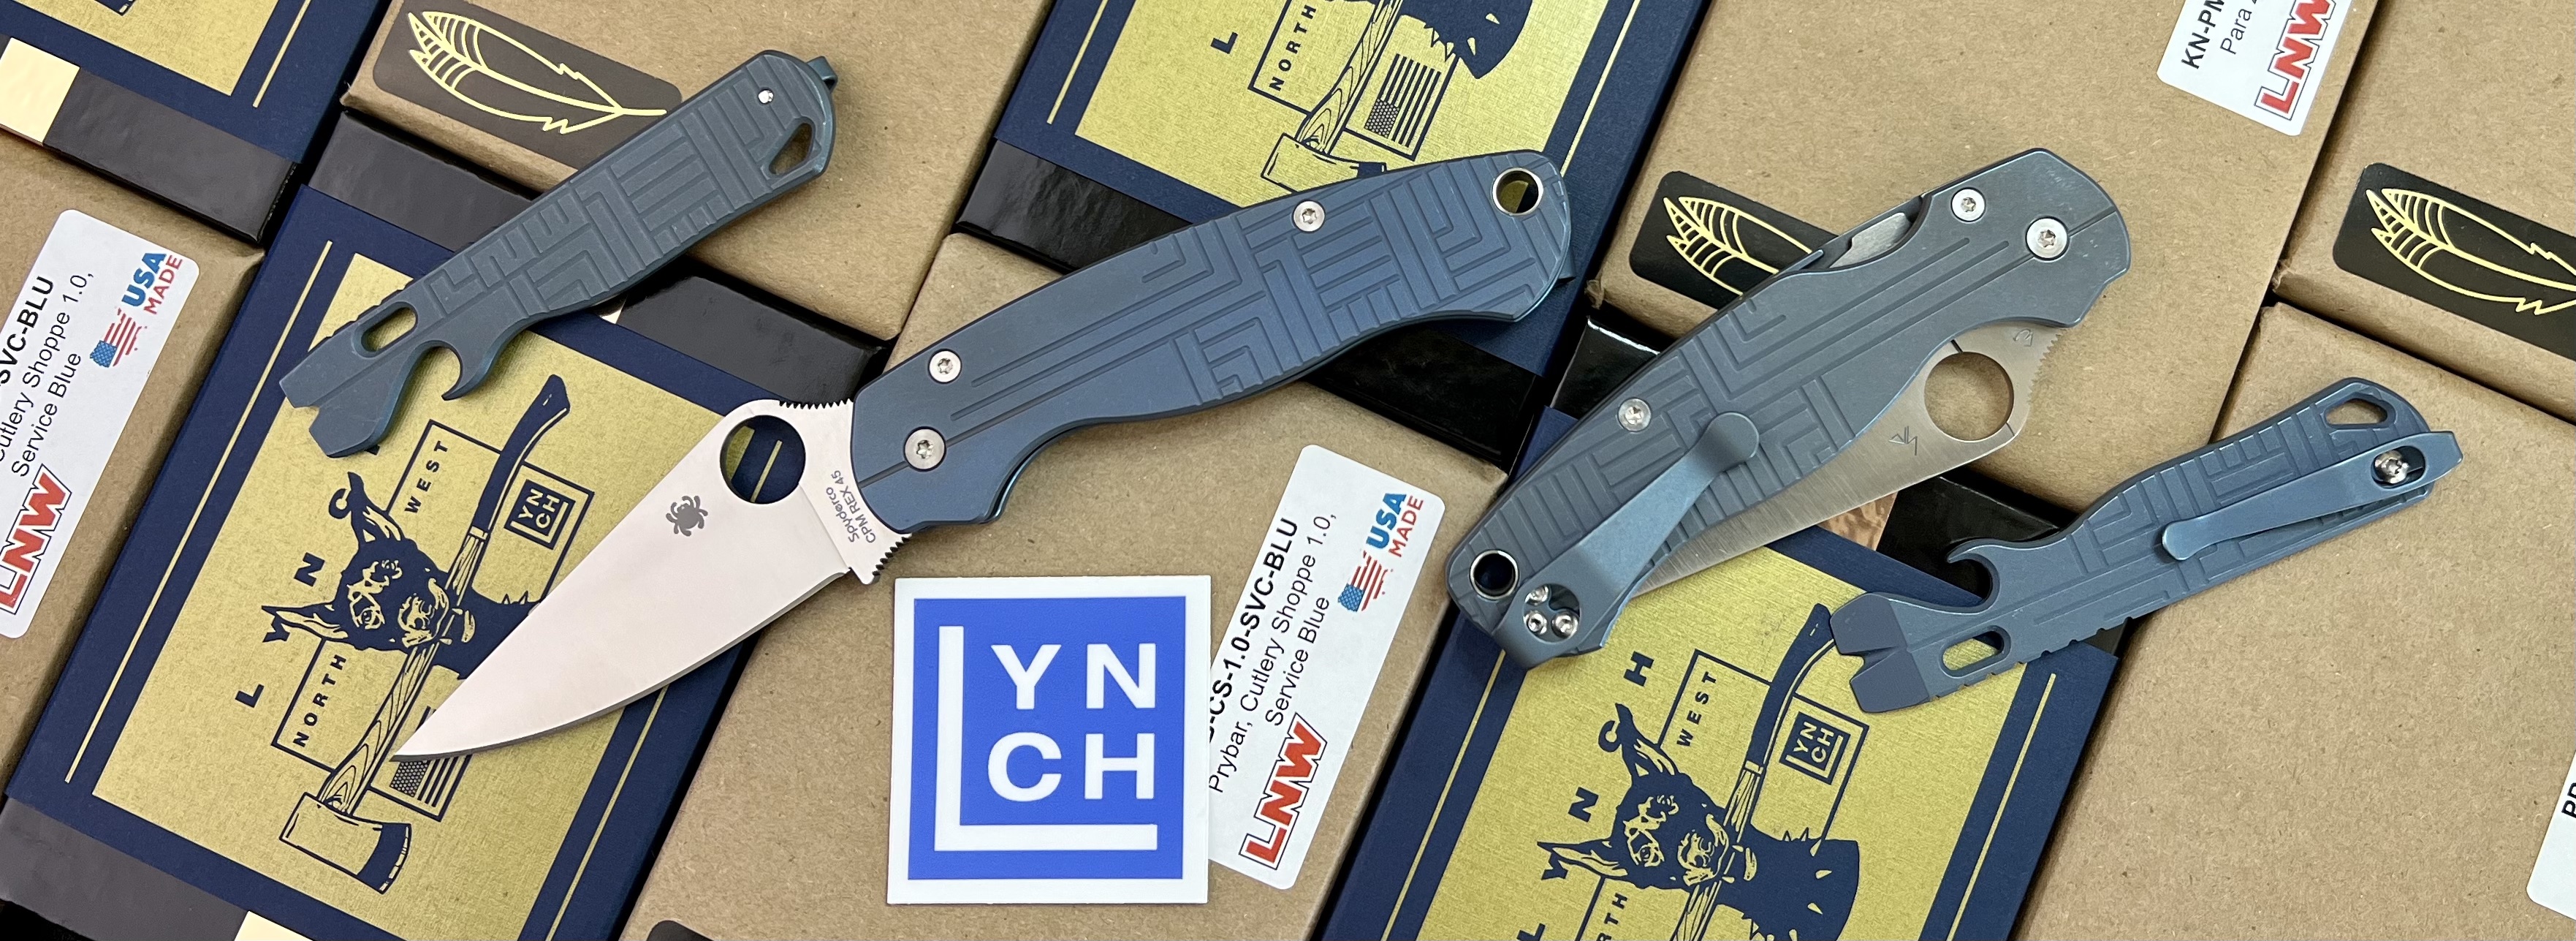 LynchNW ALL ACCESS PASS PRY BAR V1.0 - Service Blue Titanium CS